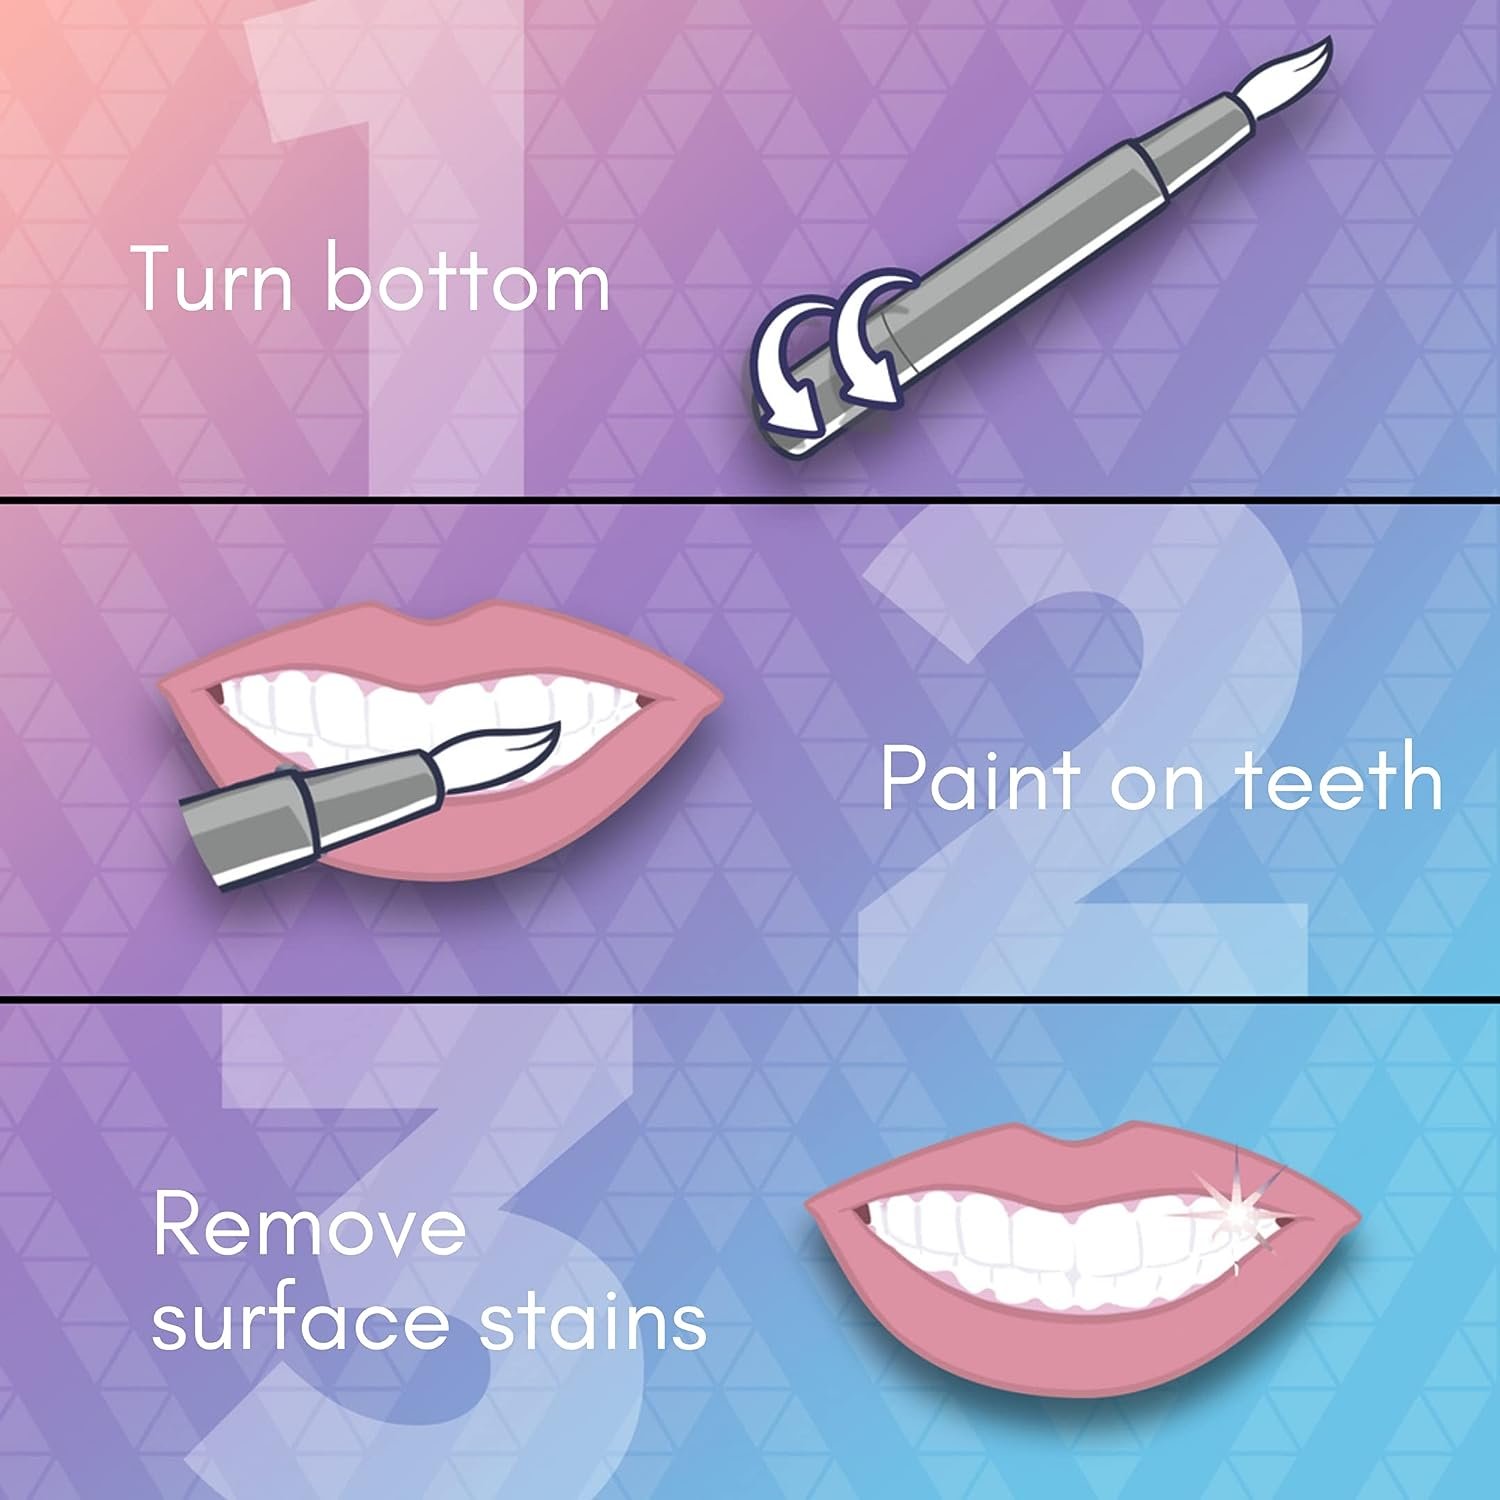 ARC On-The-Go Teeth Whitening Pen, Anytime Treatments, Mint Flavor, 0.13 Fl Oz